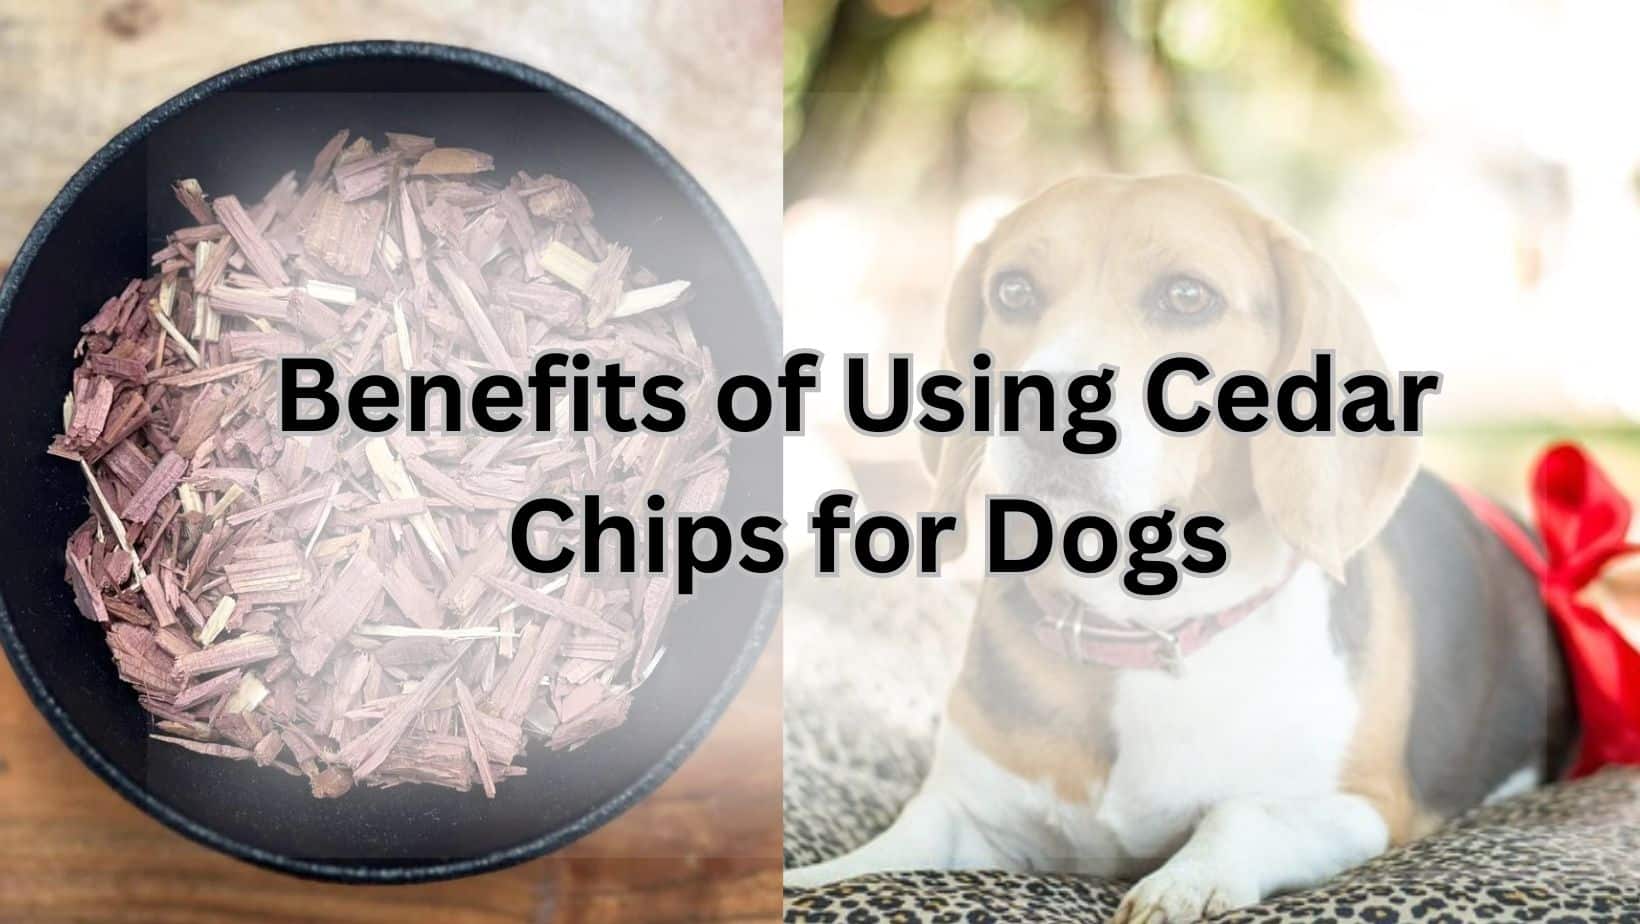 Cedar Chips for Dogs